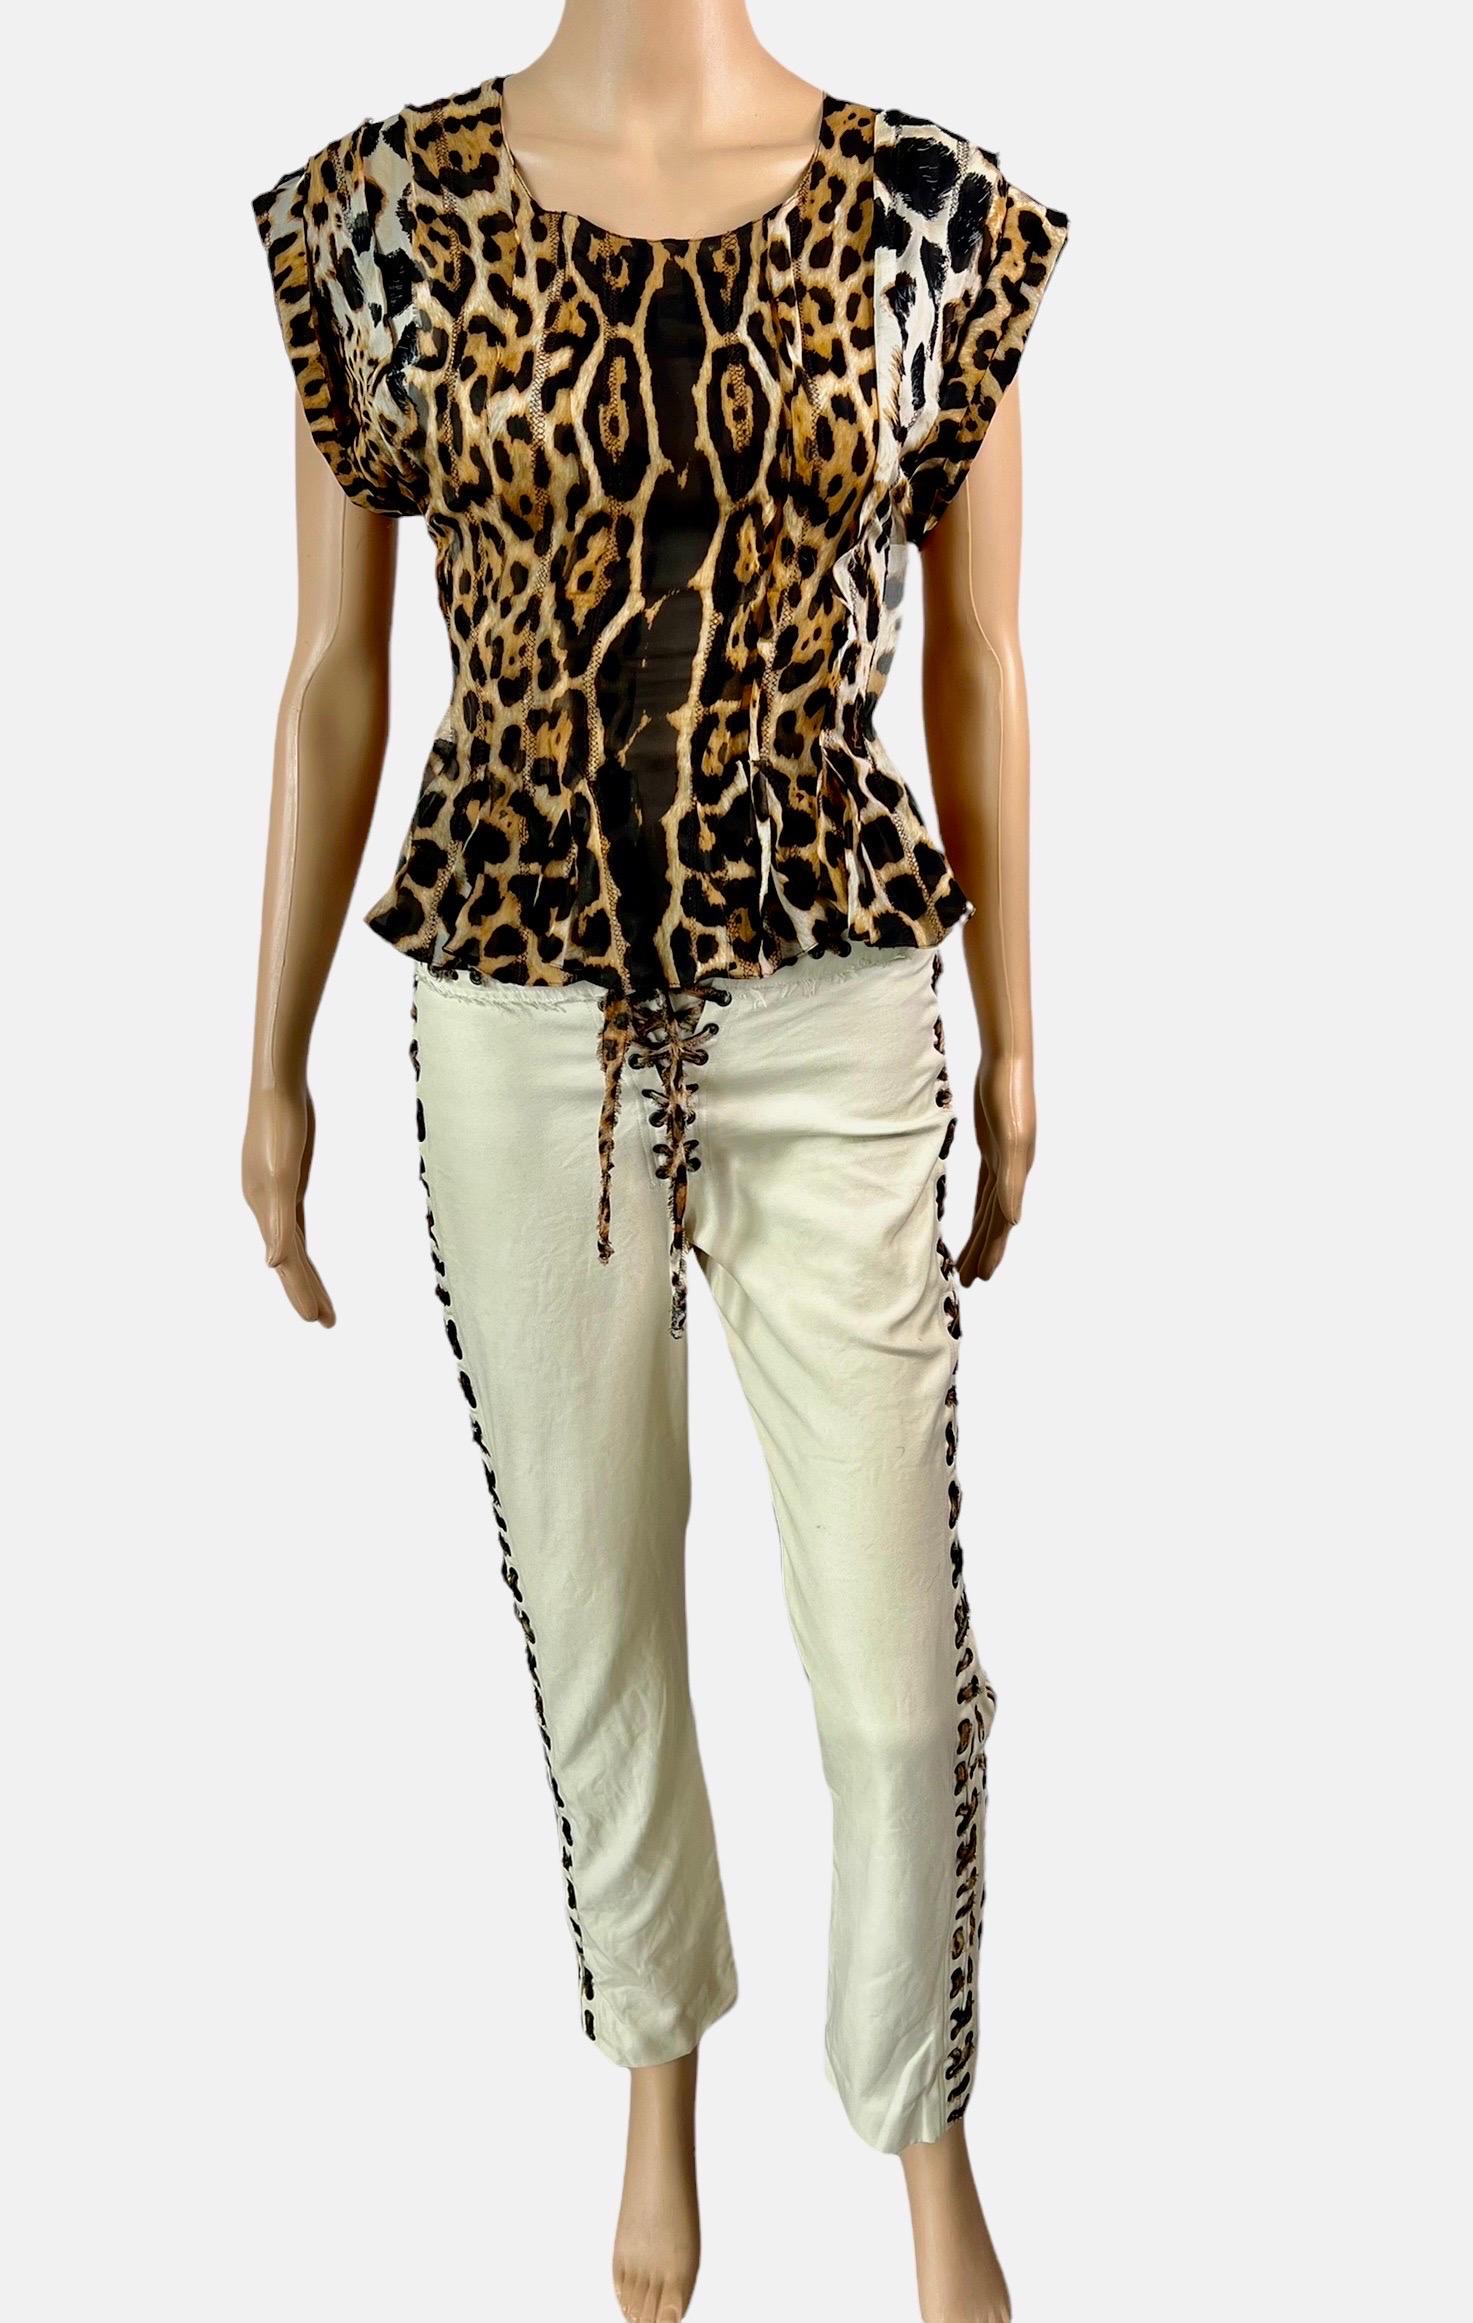 tom ford leopard pants